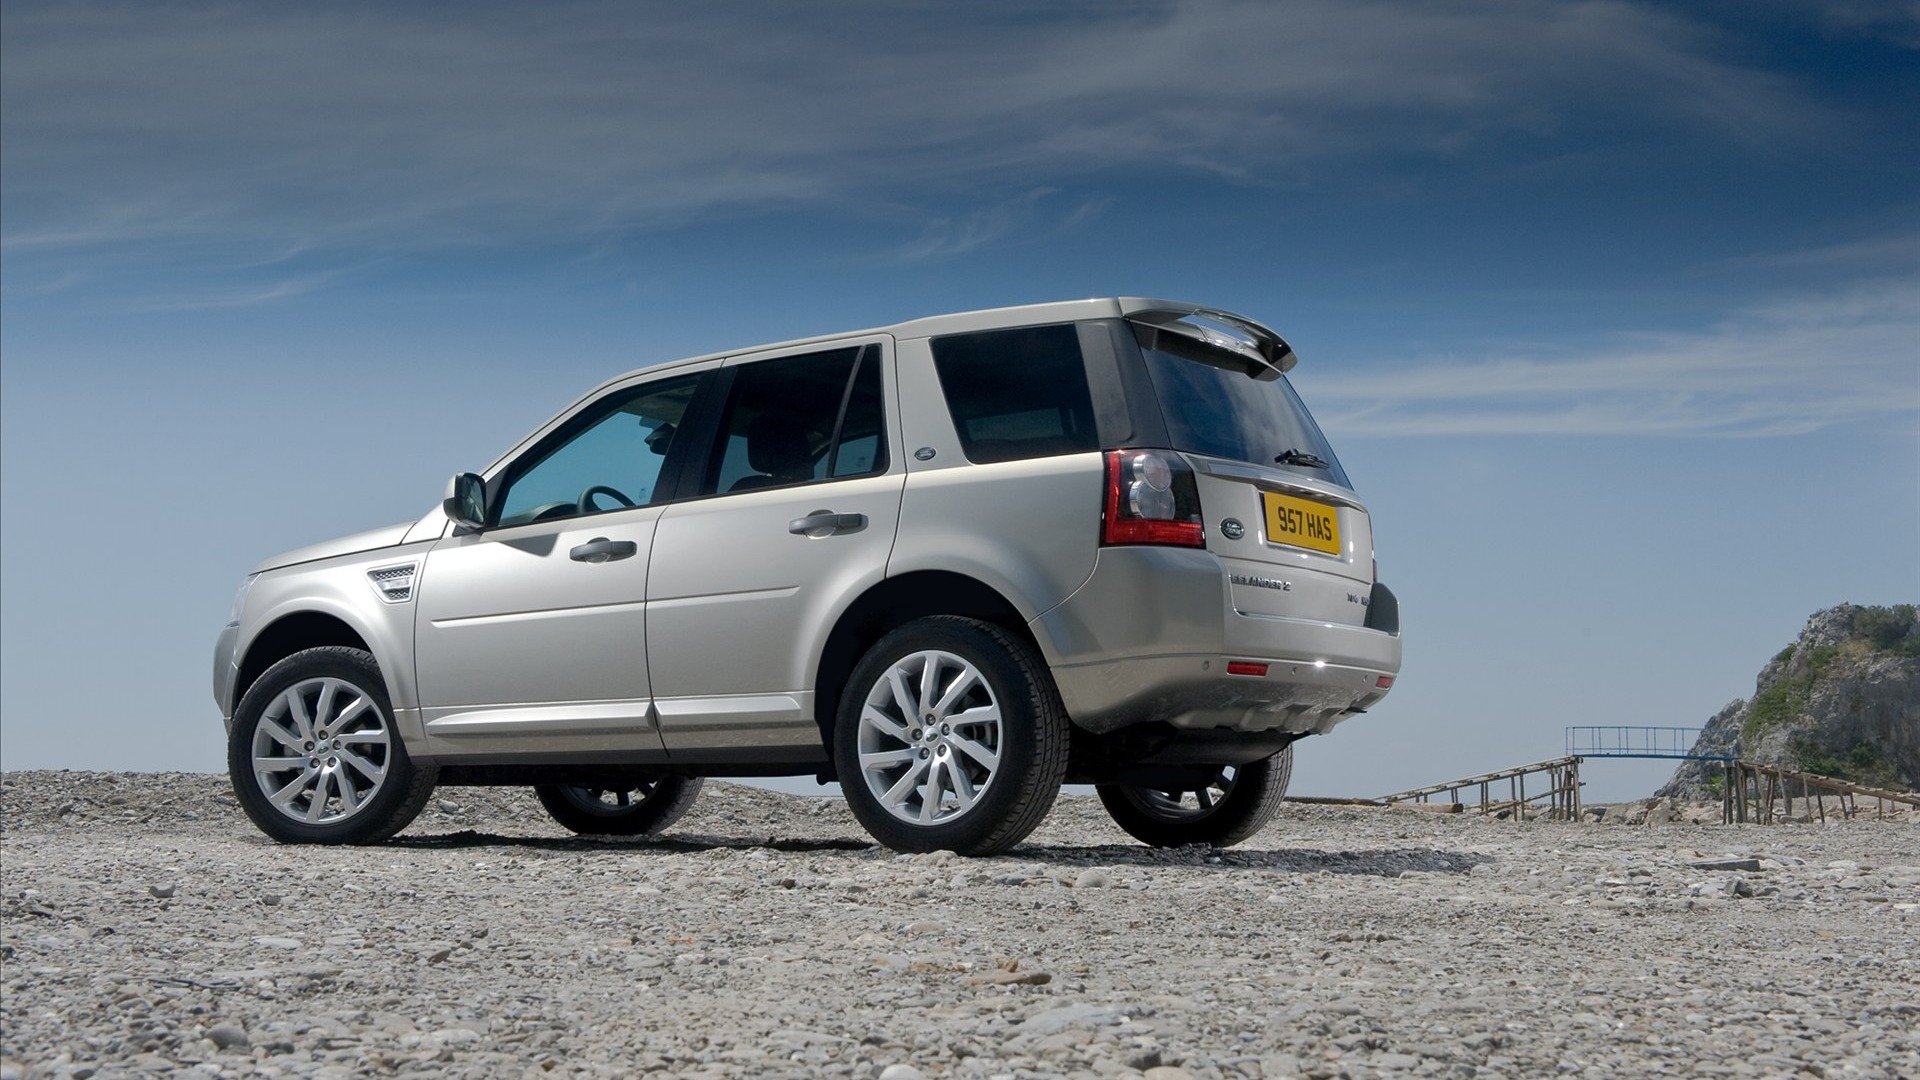 Land Rover fonds d'écran 2011 (1) #7 - 1920x1080